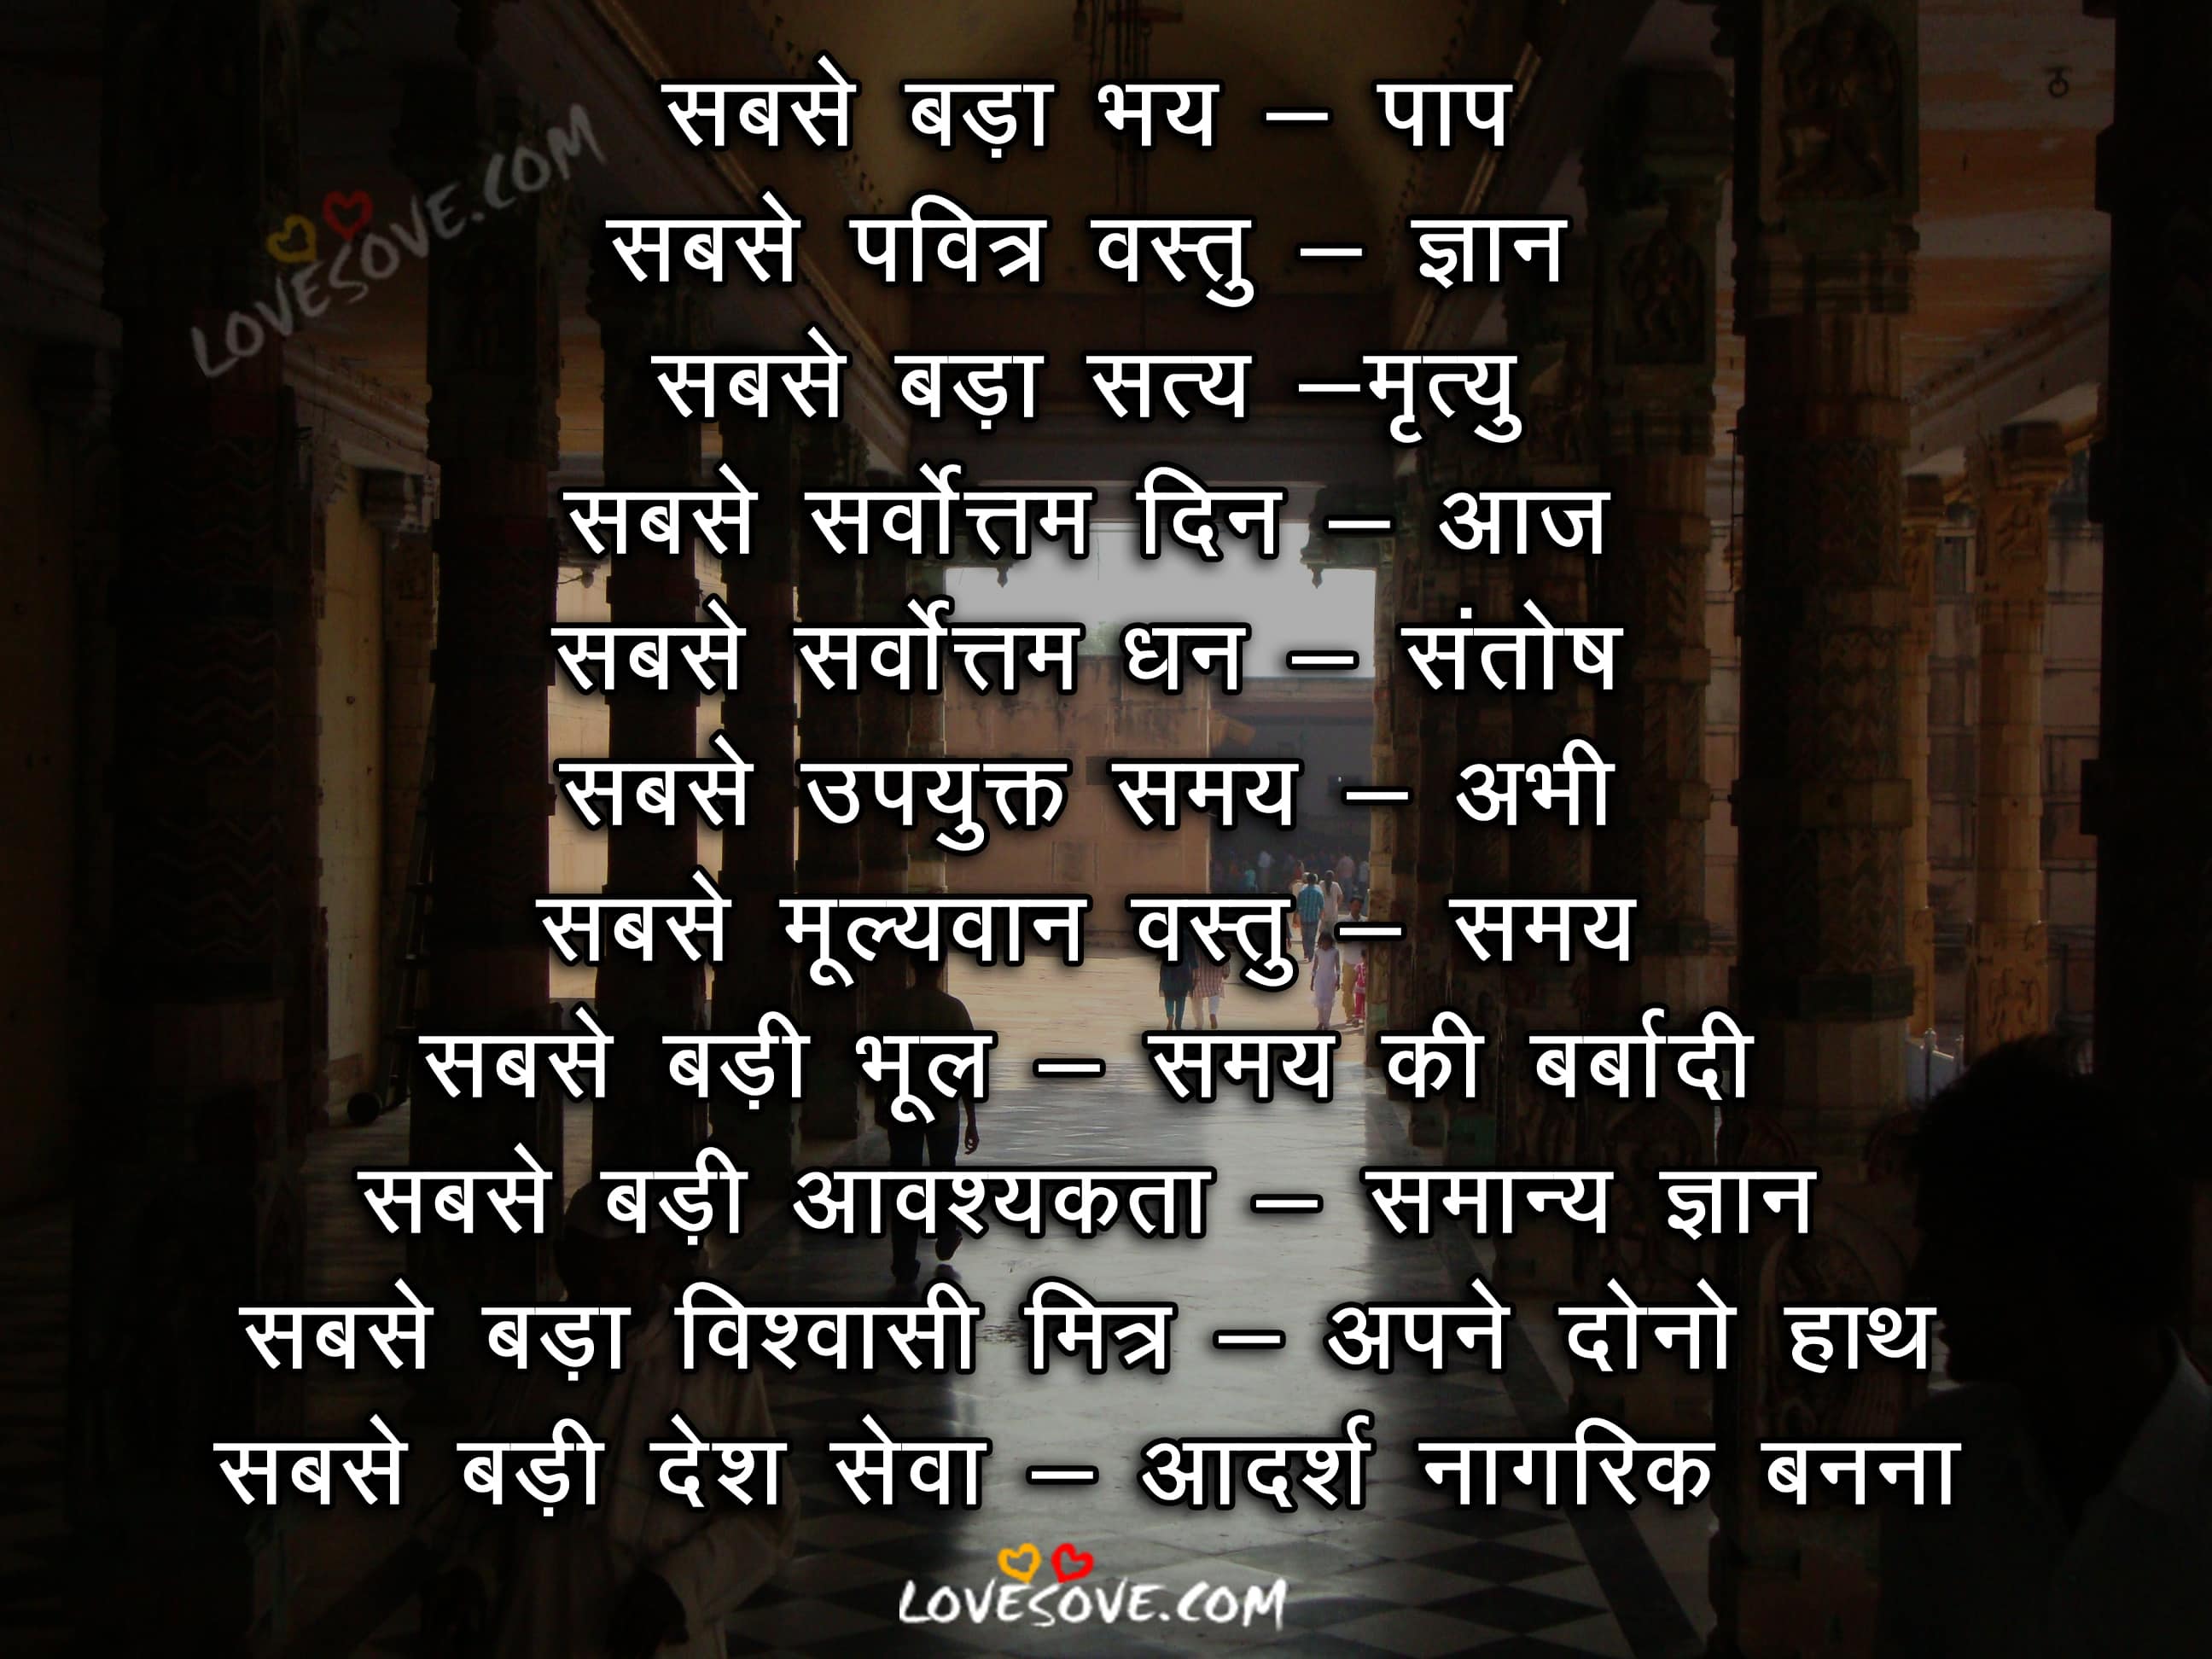 hindi suvichar image, हिंदी सुविचार वालपेपर, सबसे बड़ा भय - पाप - Hindi Suvichar Quote With Image, anmol suvichar image